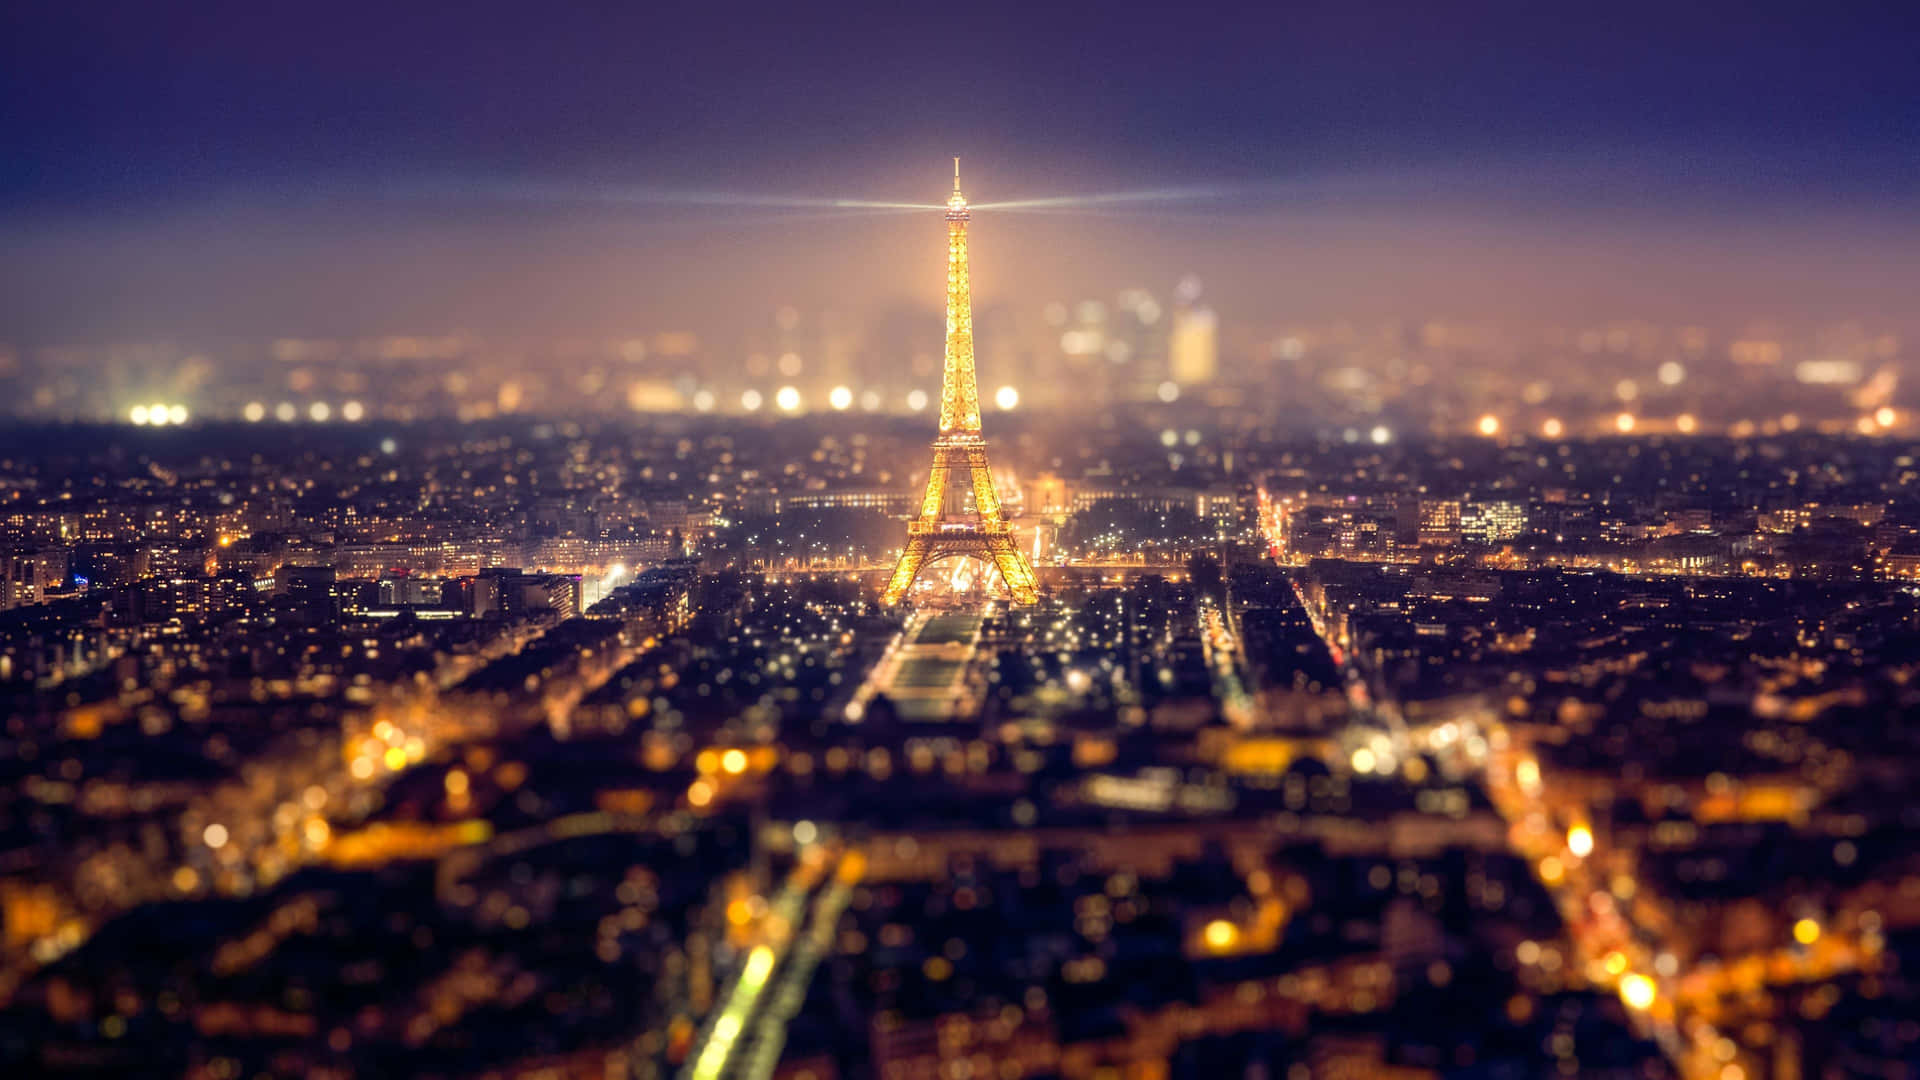 Image Illuminated Eiffel Tower In Paris At Night